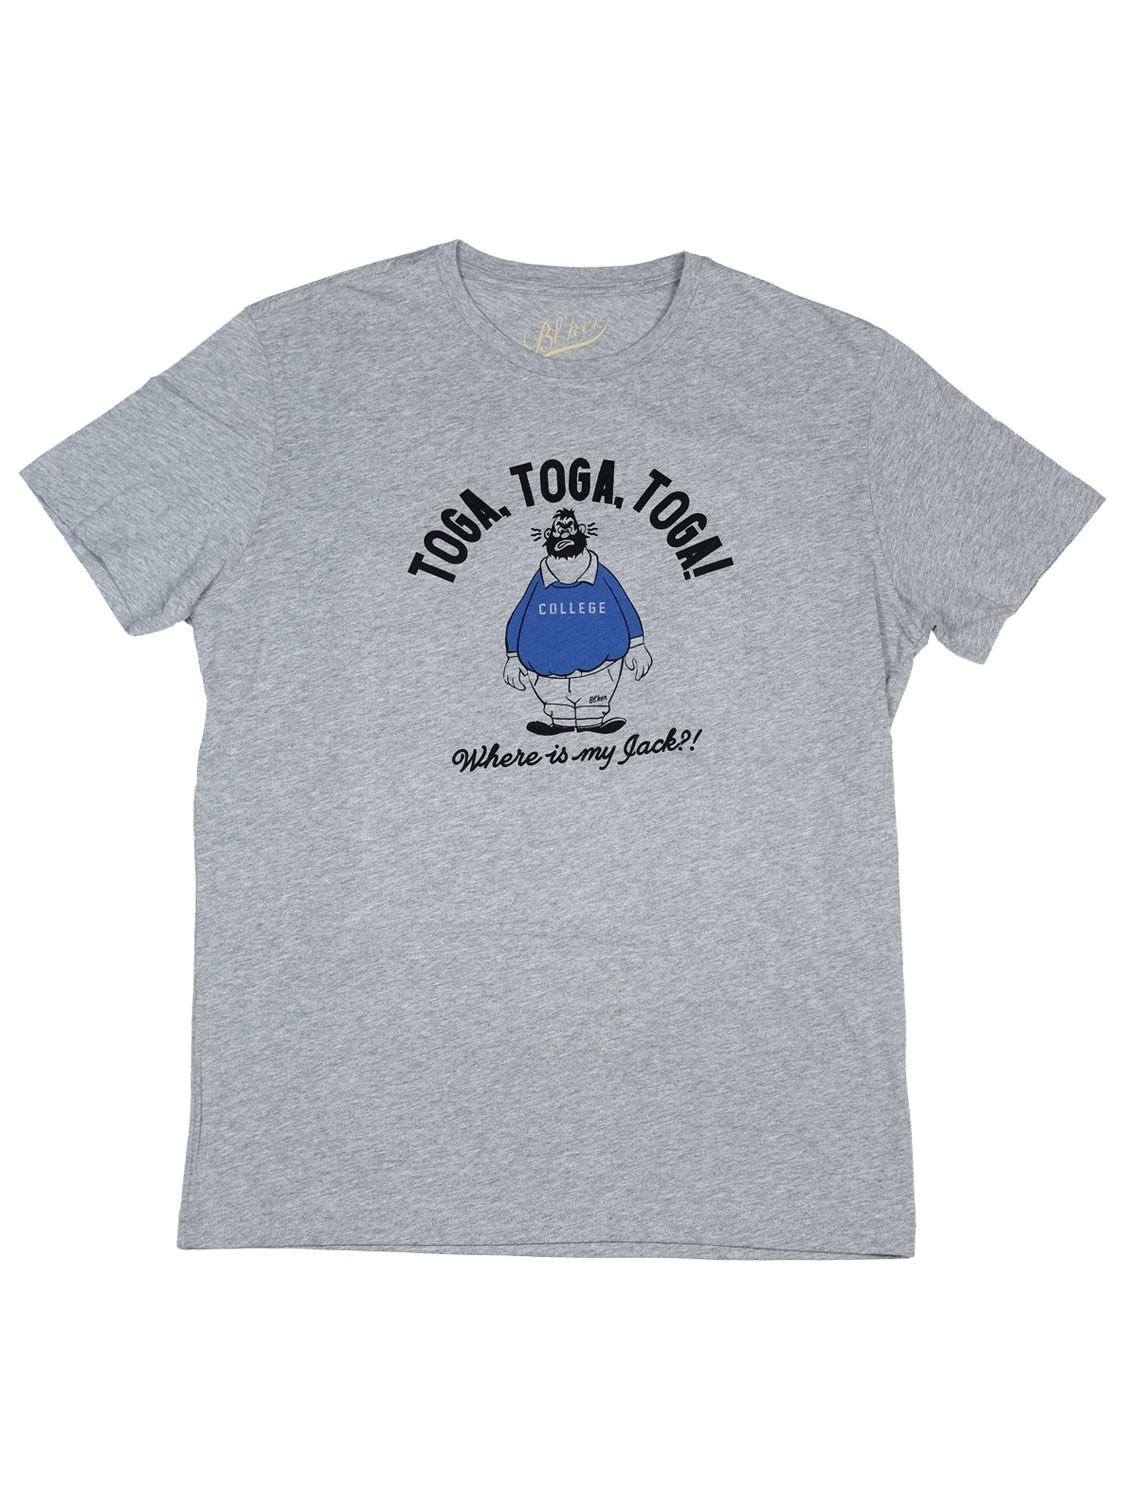 Bl'ker Men's T-shirt Graphic Toga, Toga, Toga